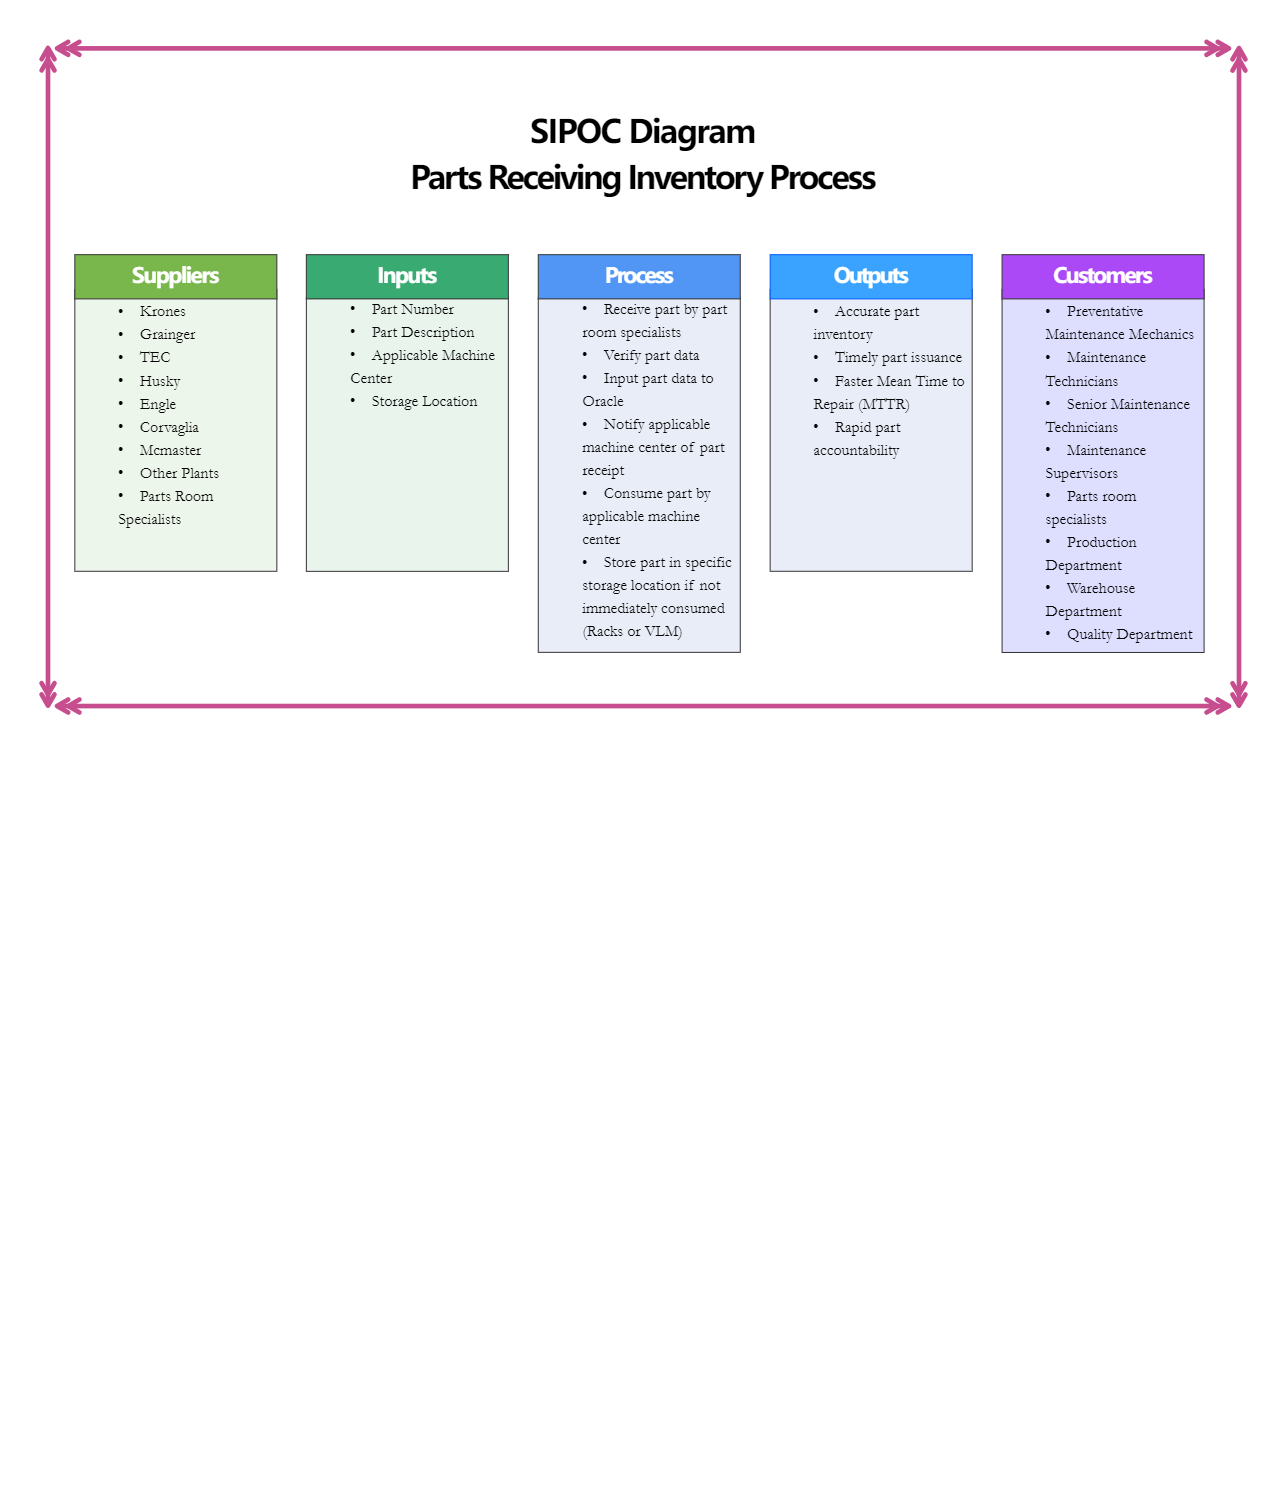 Parts Receiving Inventory Process SIPOC Diagram